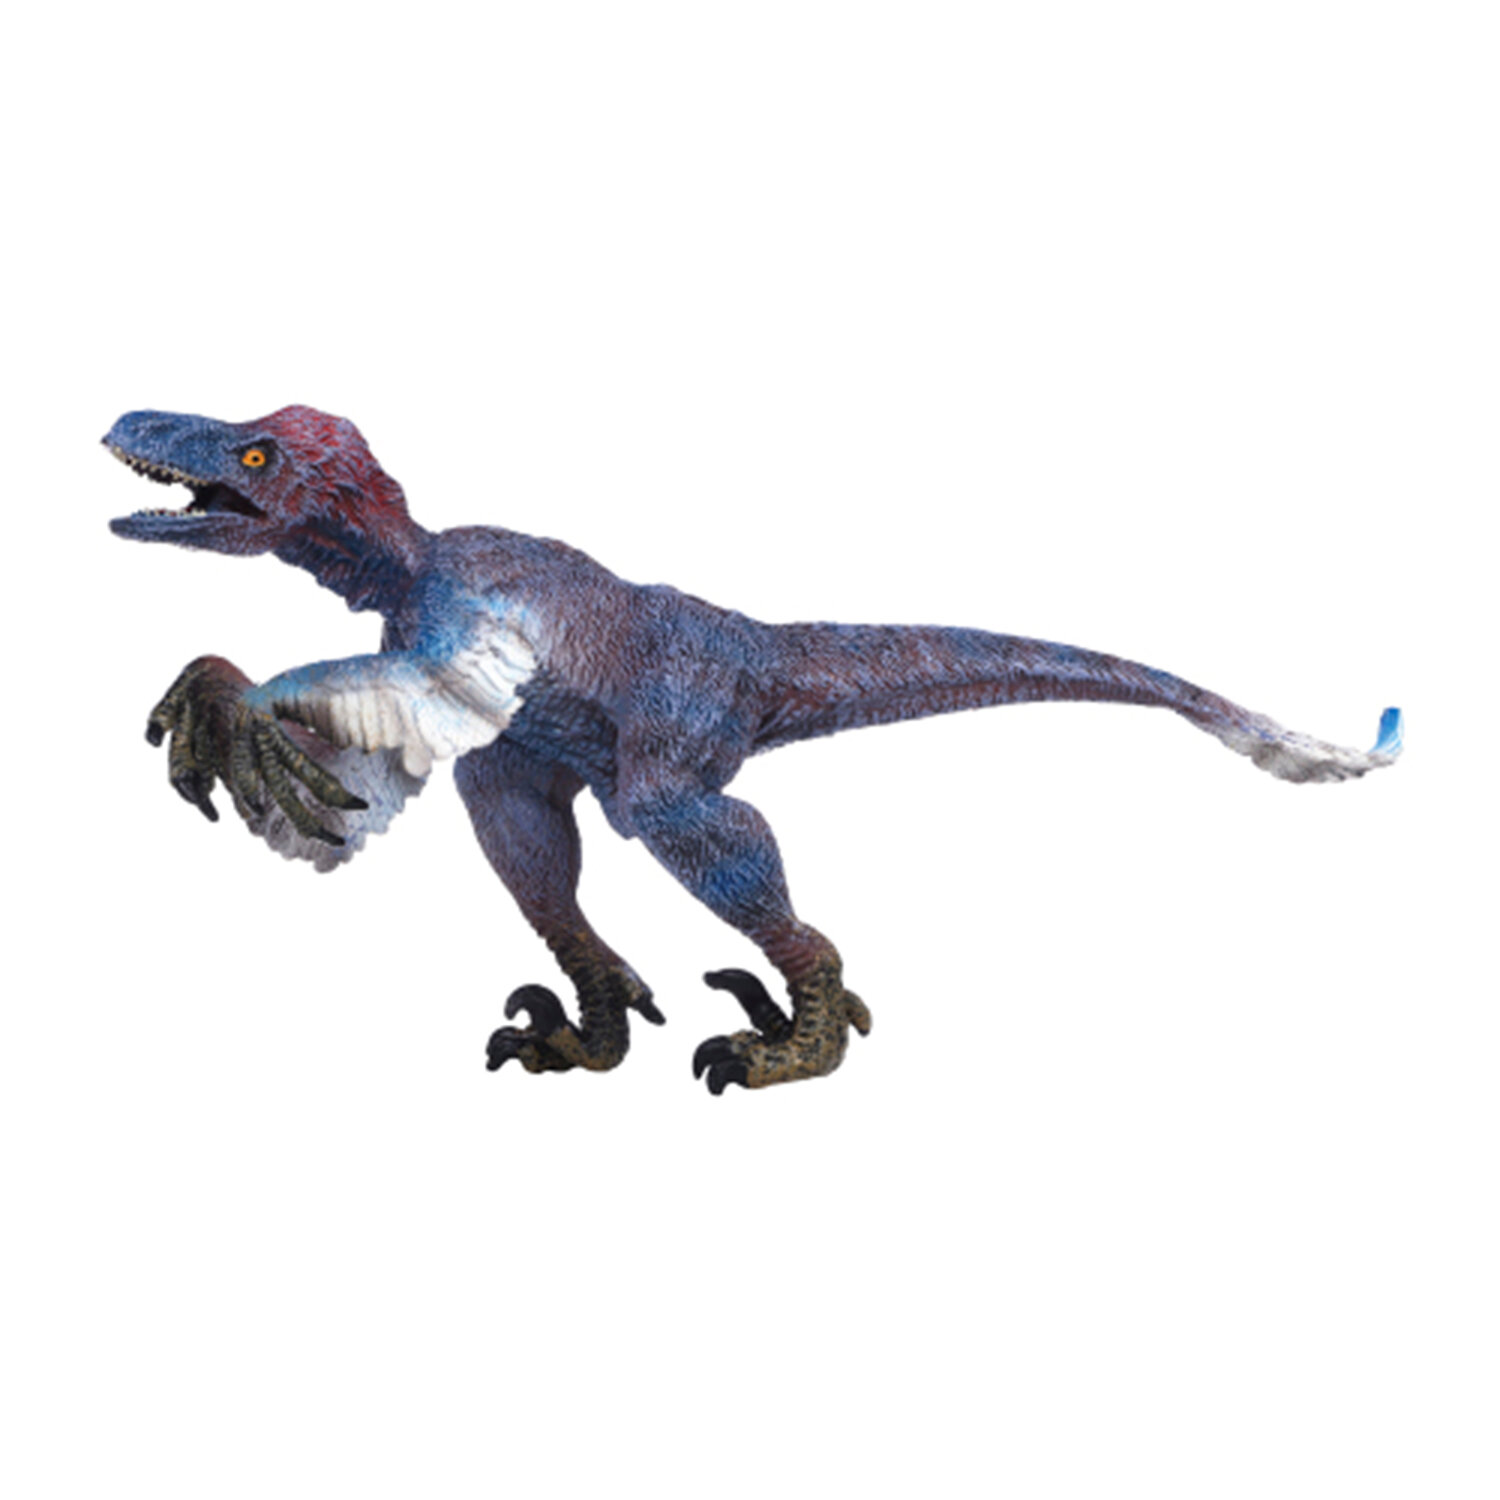 Игрушка динозавр серии "Мир динозавров" - Фигурка Орнитомим